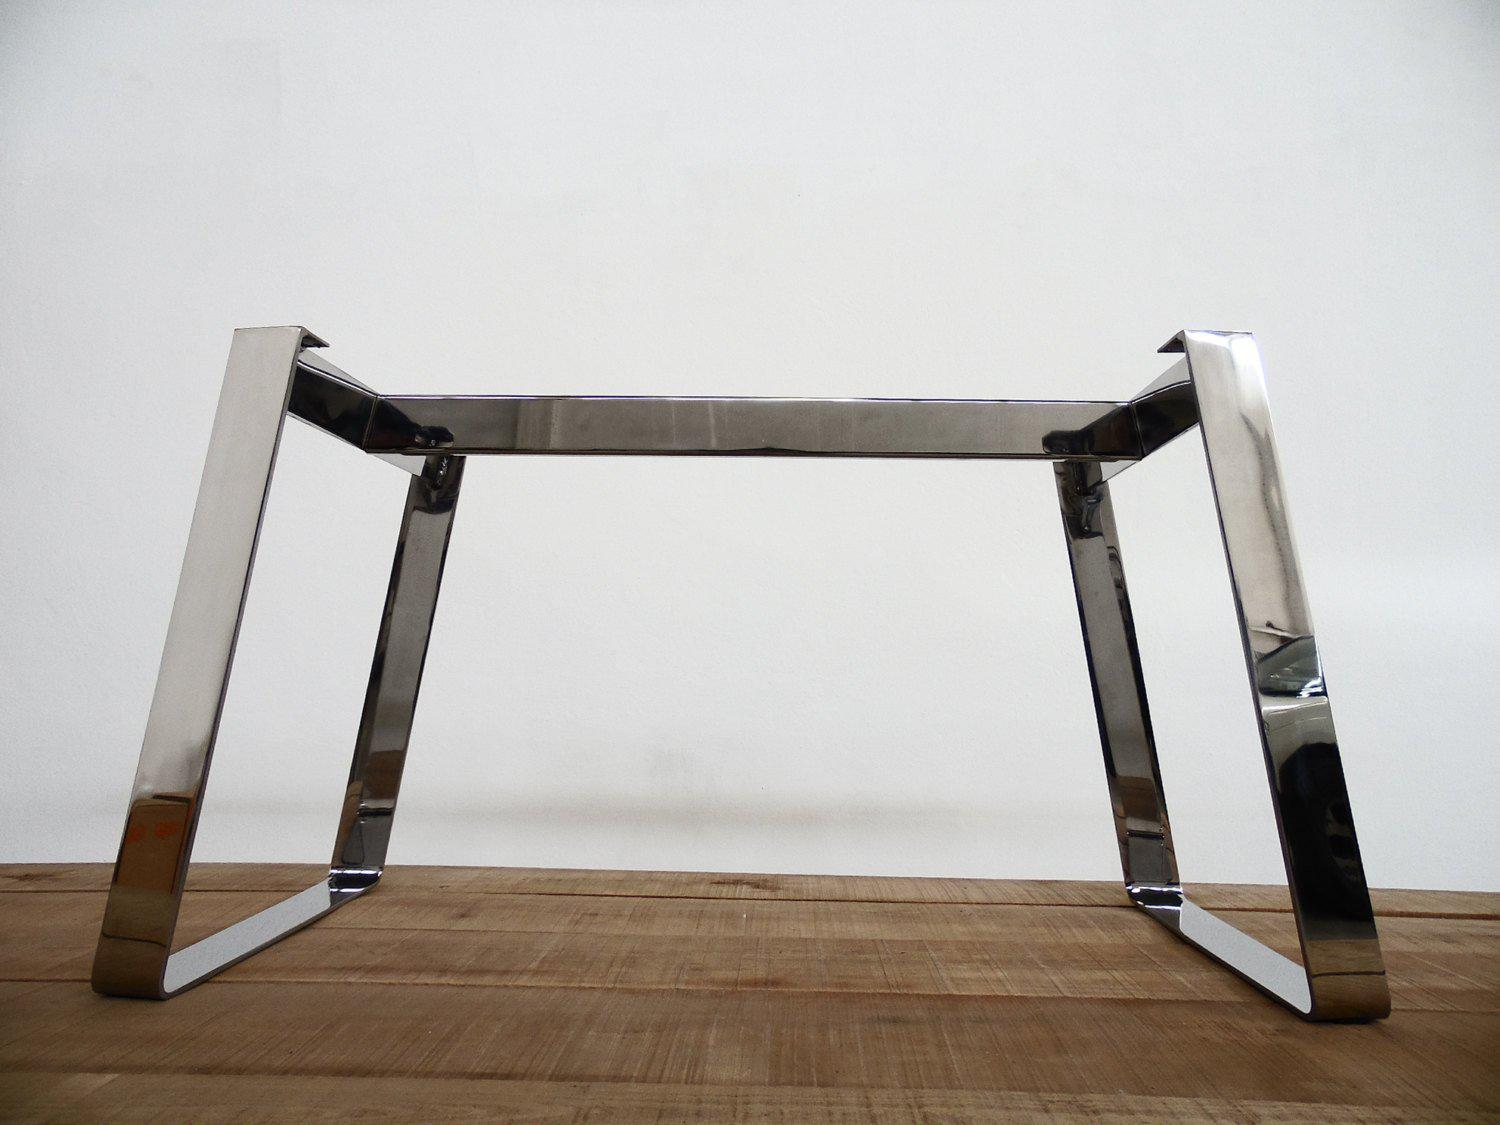 Stainless Steel Table Legs